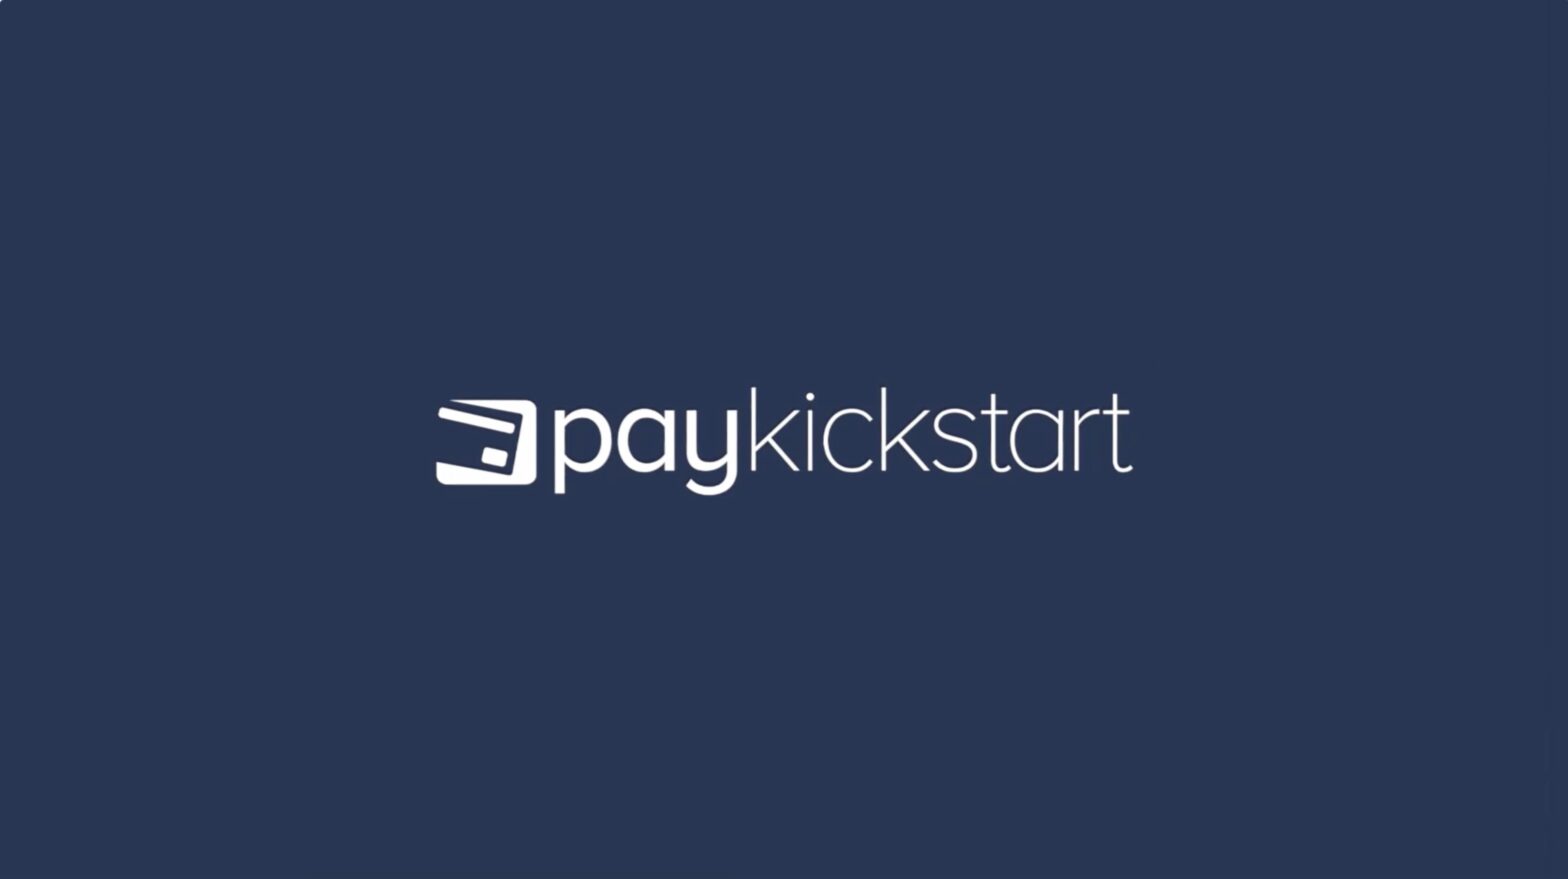 alt="pay kickstart affiliate program"